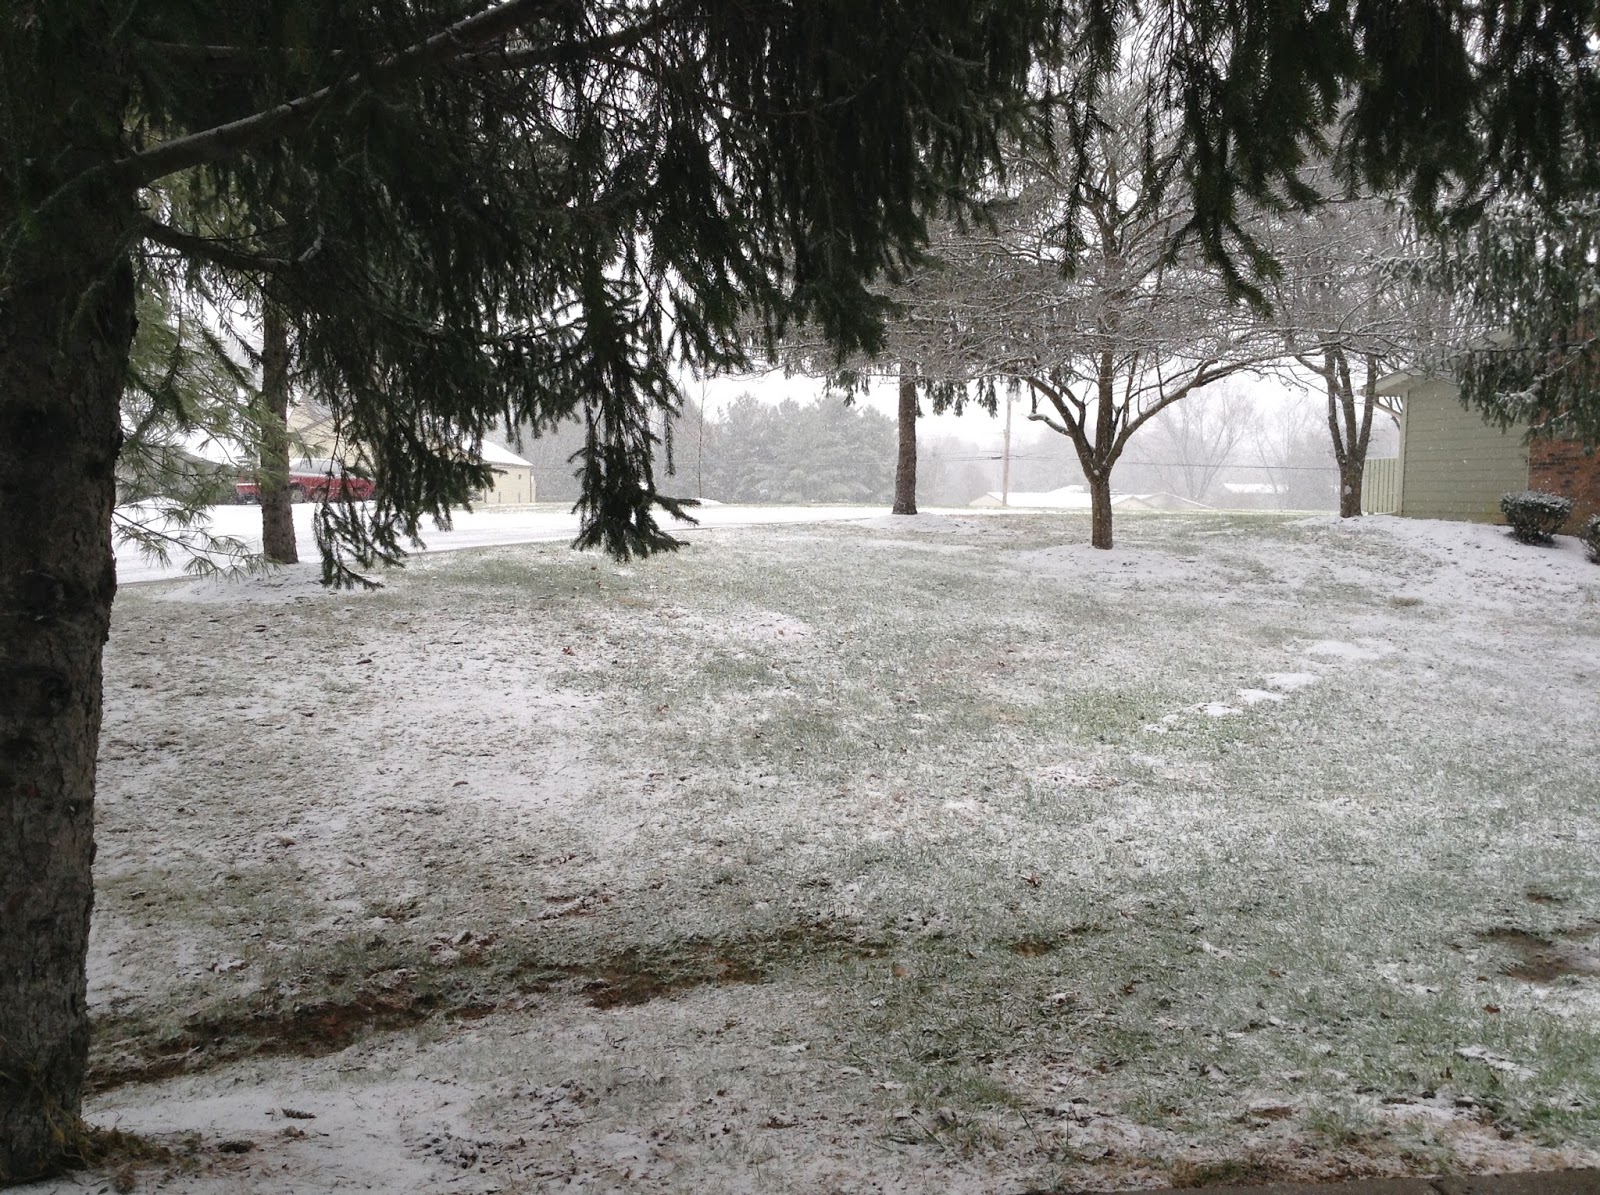 Burl's Weather Page: It's snowing in Bloomington Indiana. bloomington weather radar